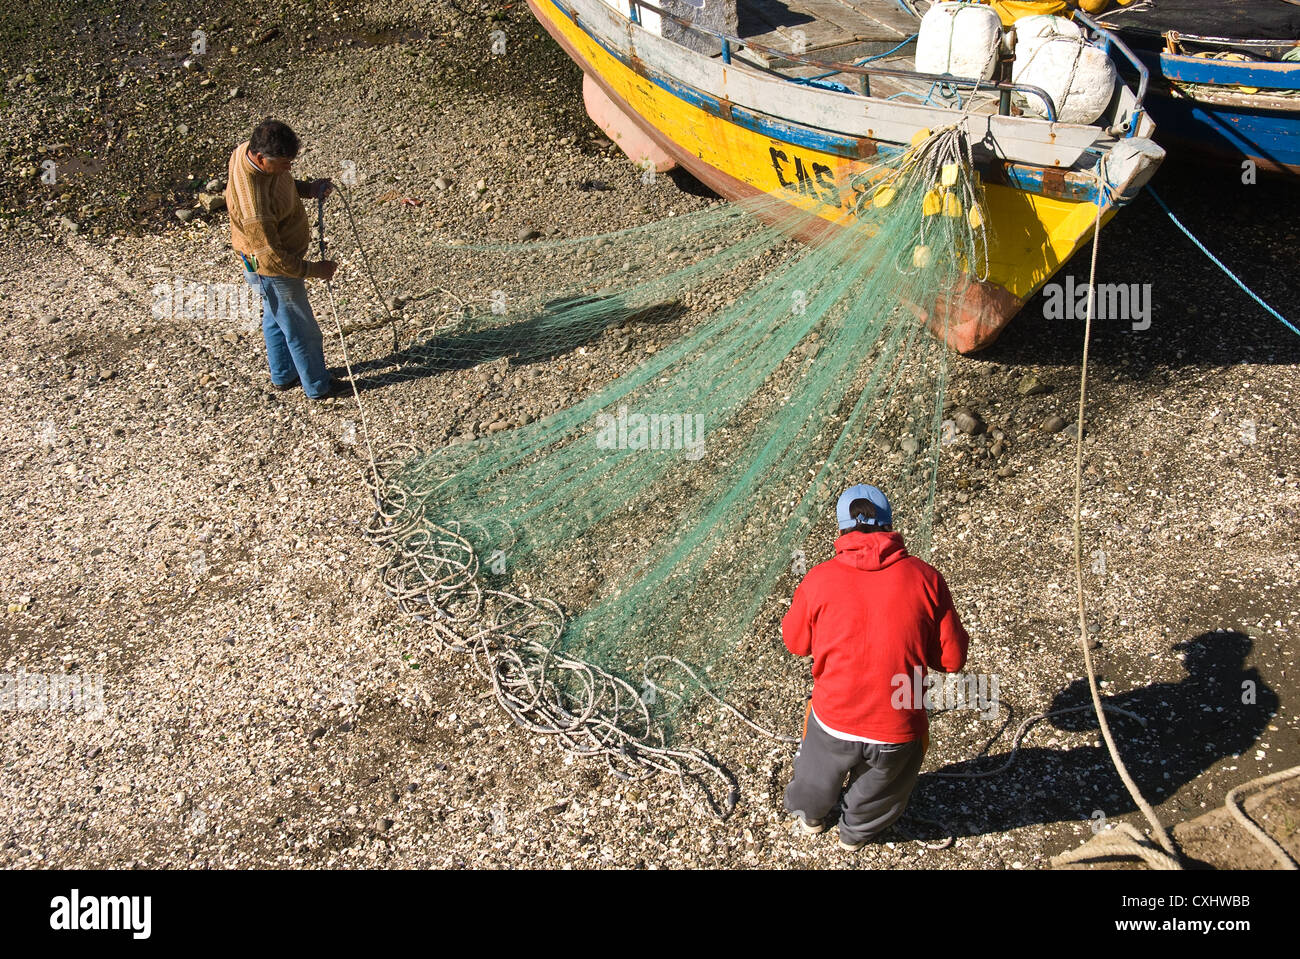 Elk198-3743 Chile, Chiloe Island, Dalcahue, fishermen with net Stock Photo